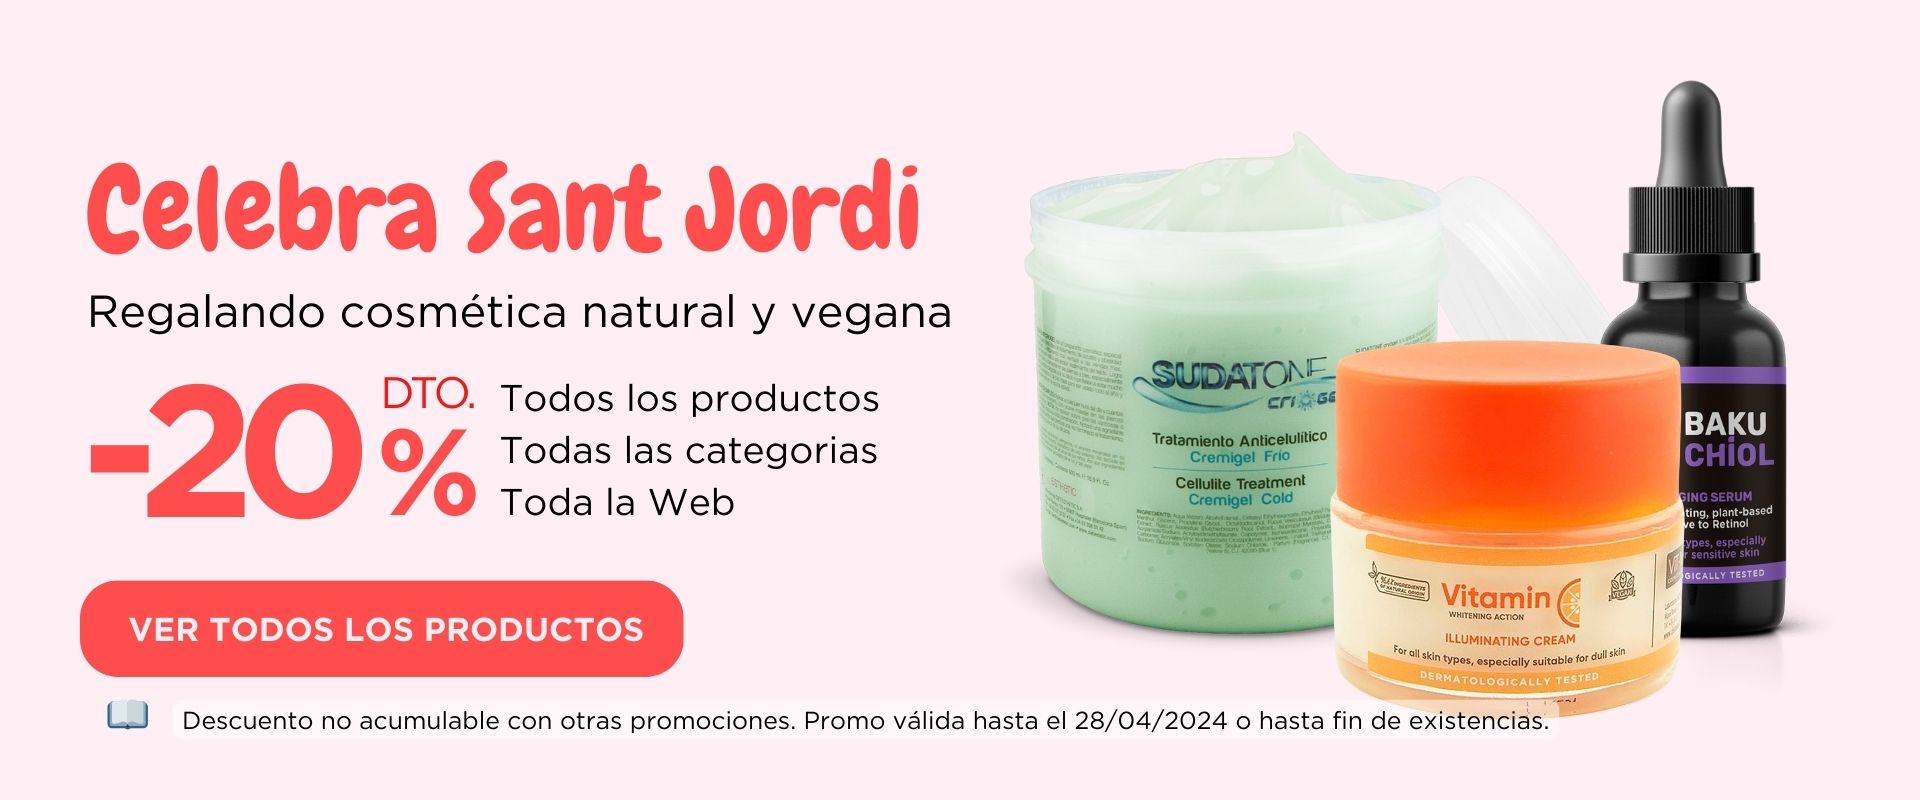 Celebra Sant Jordi con cosmética Natural y Vegana